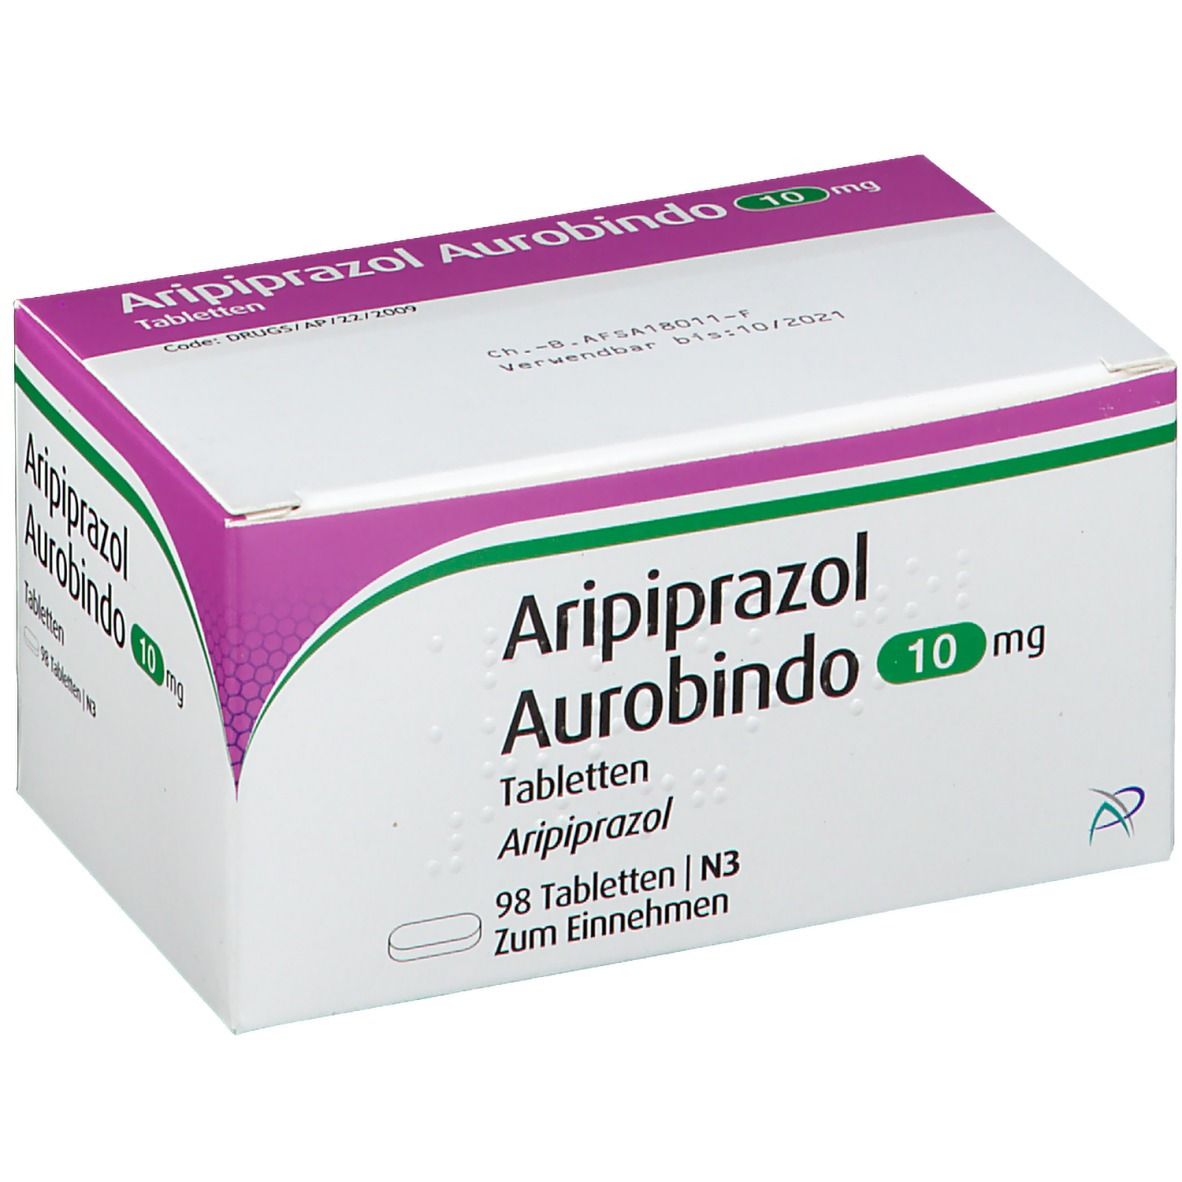 Aripiprazol Aurobindo 10 mg